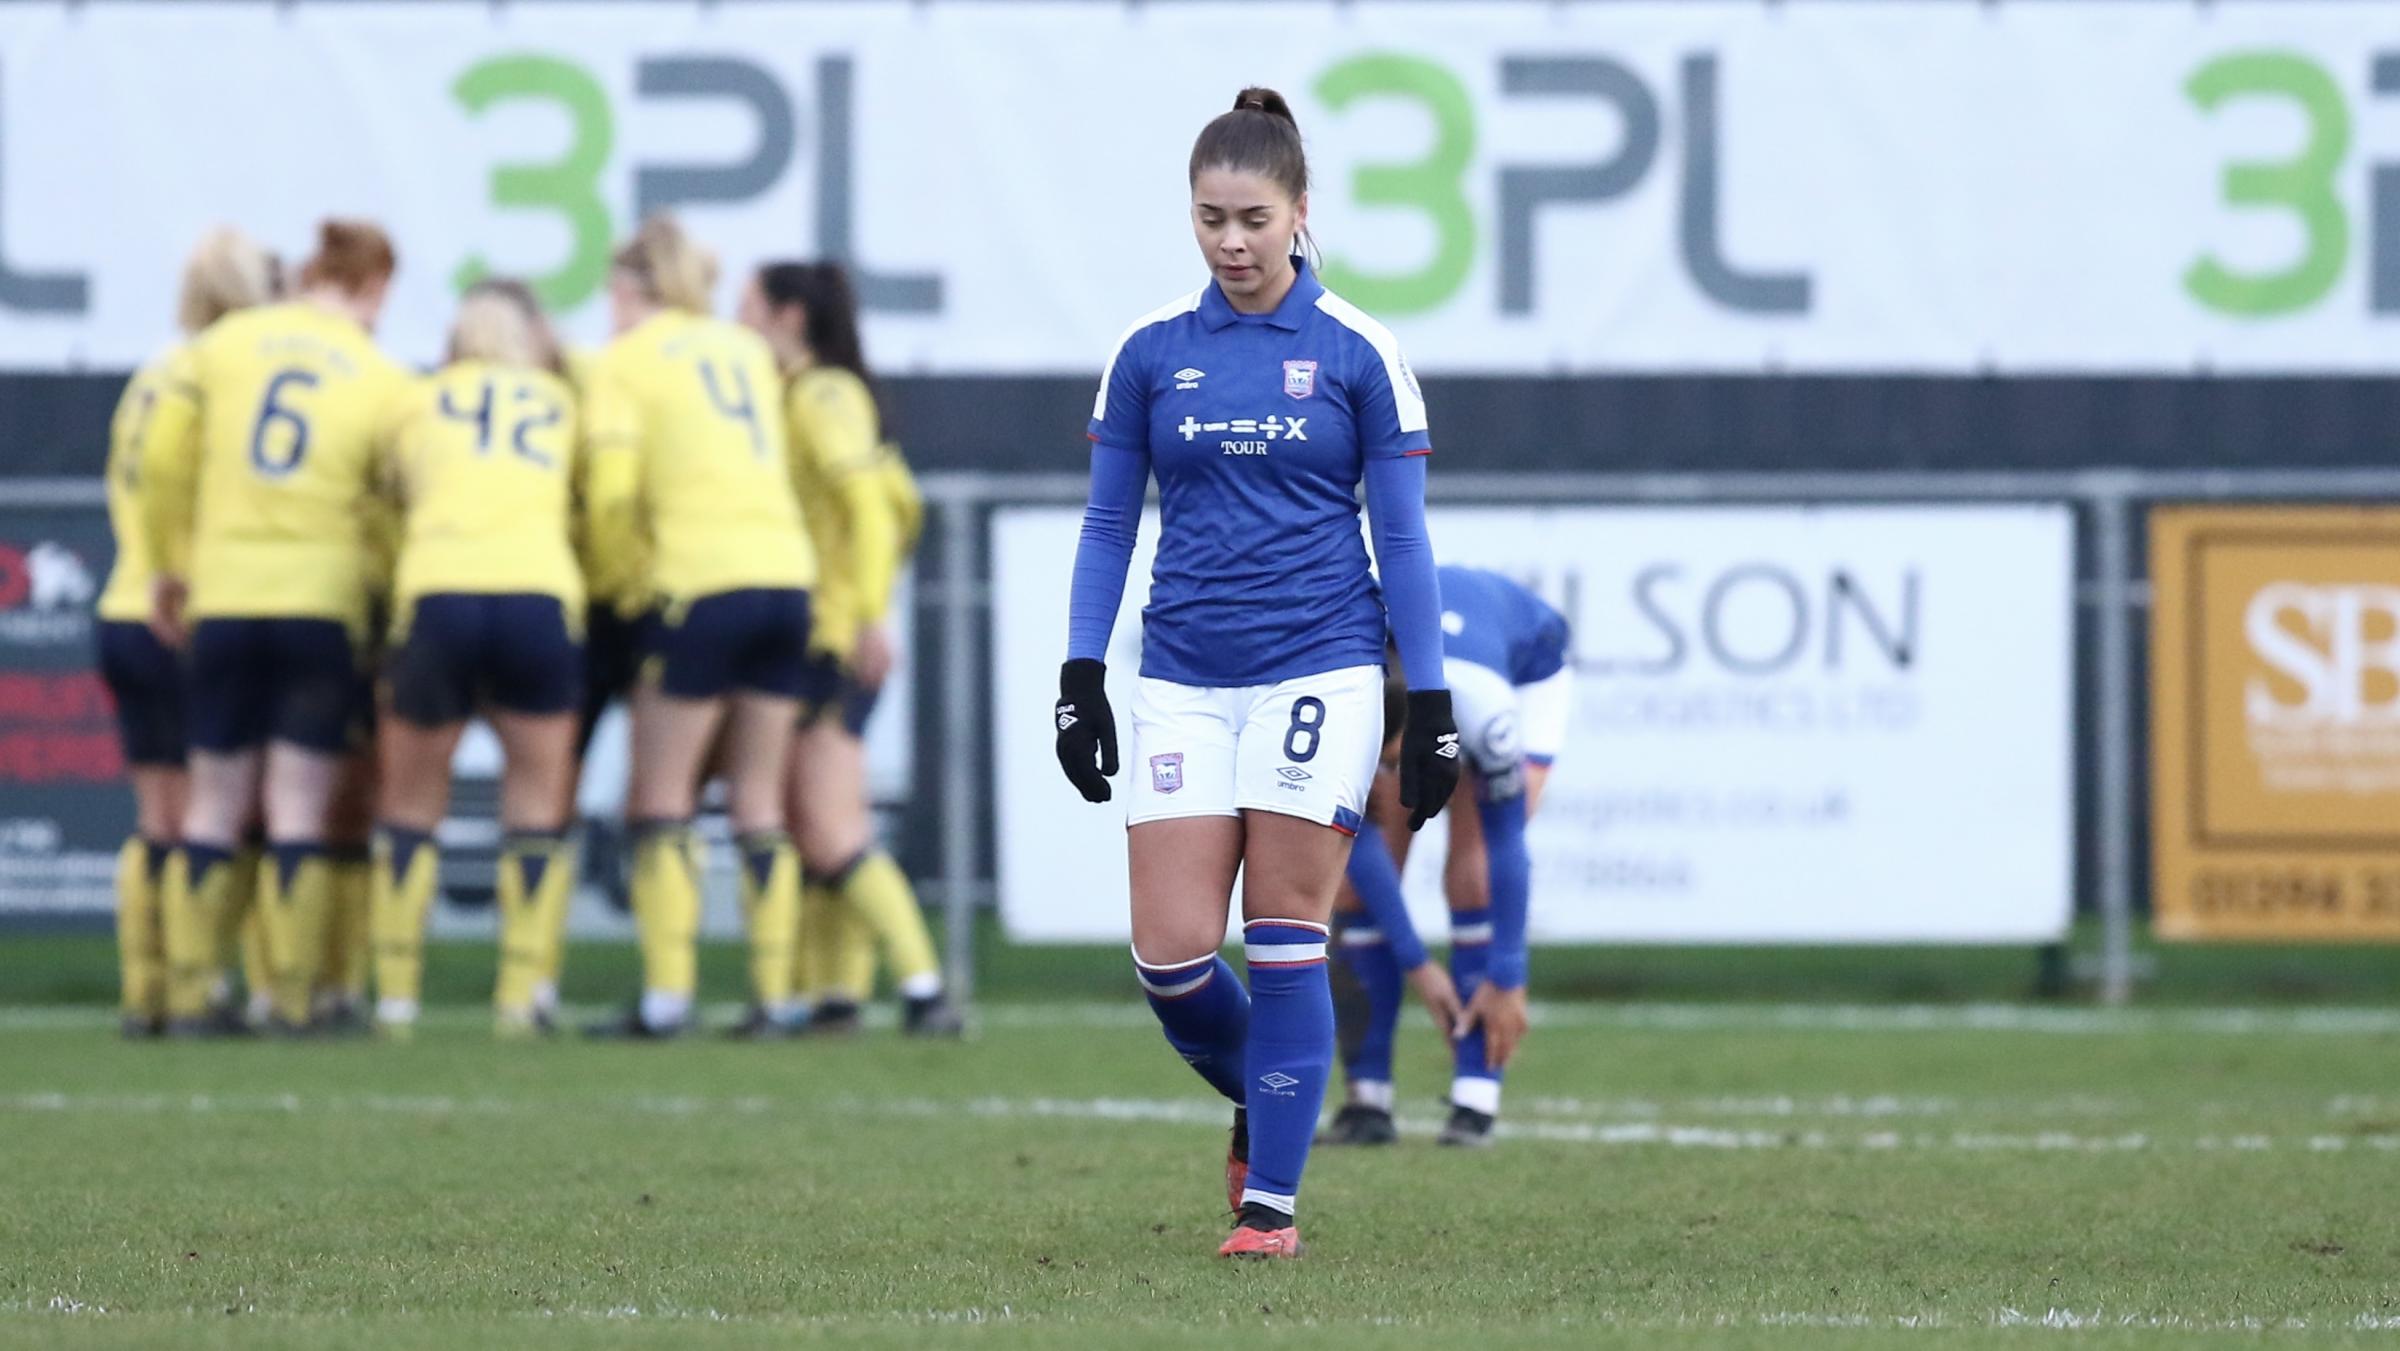 Ipswich Town Women 0-1 Oxford United: Match report